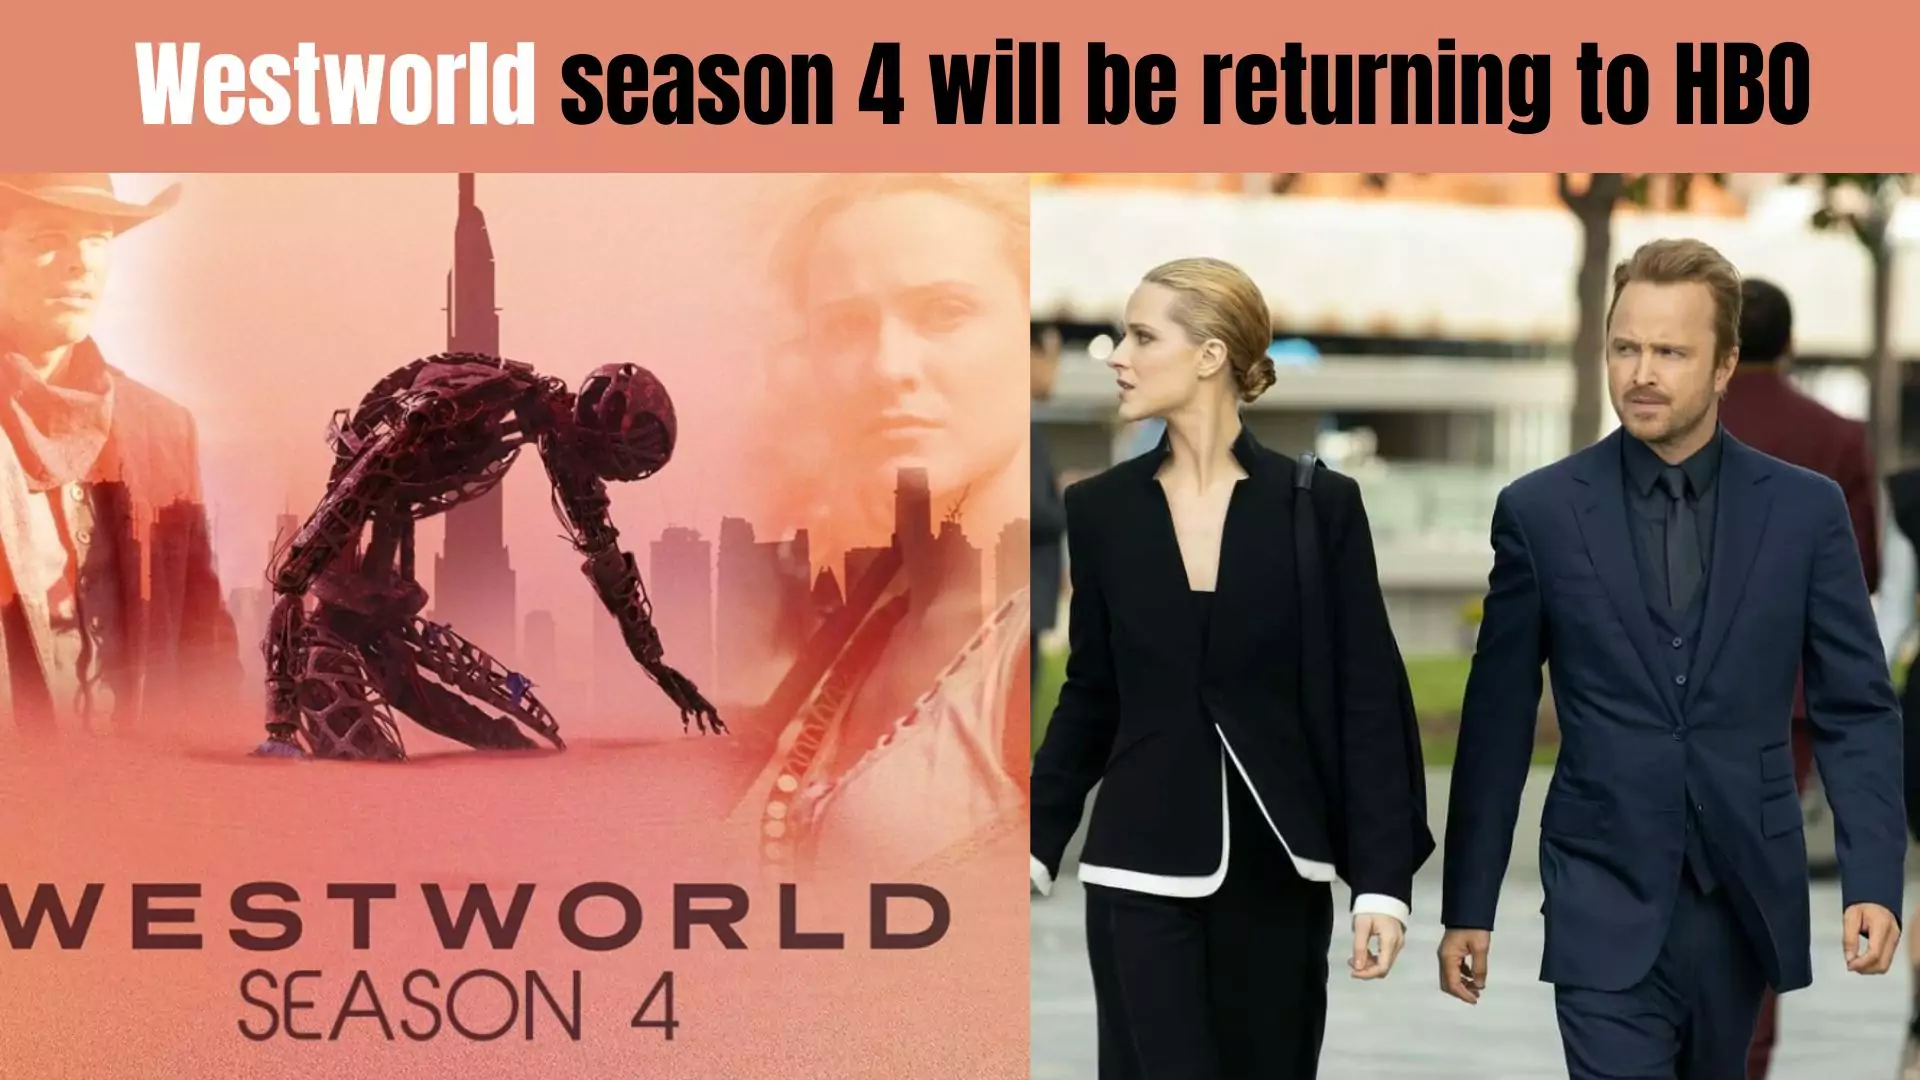 Westworld season 4 will be returning to HBO